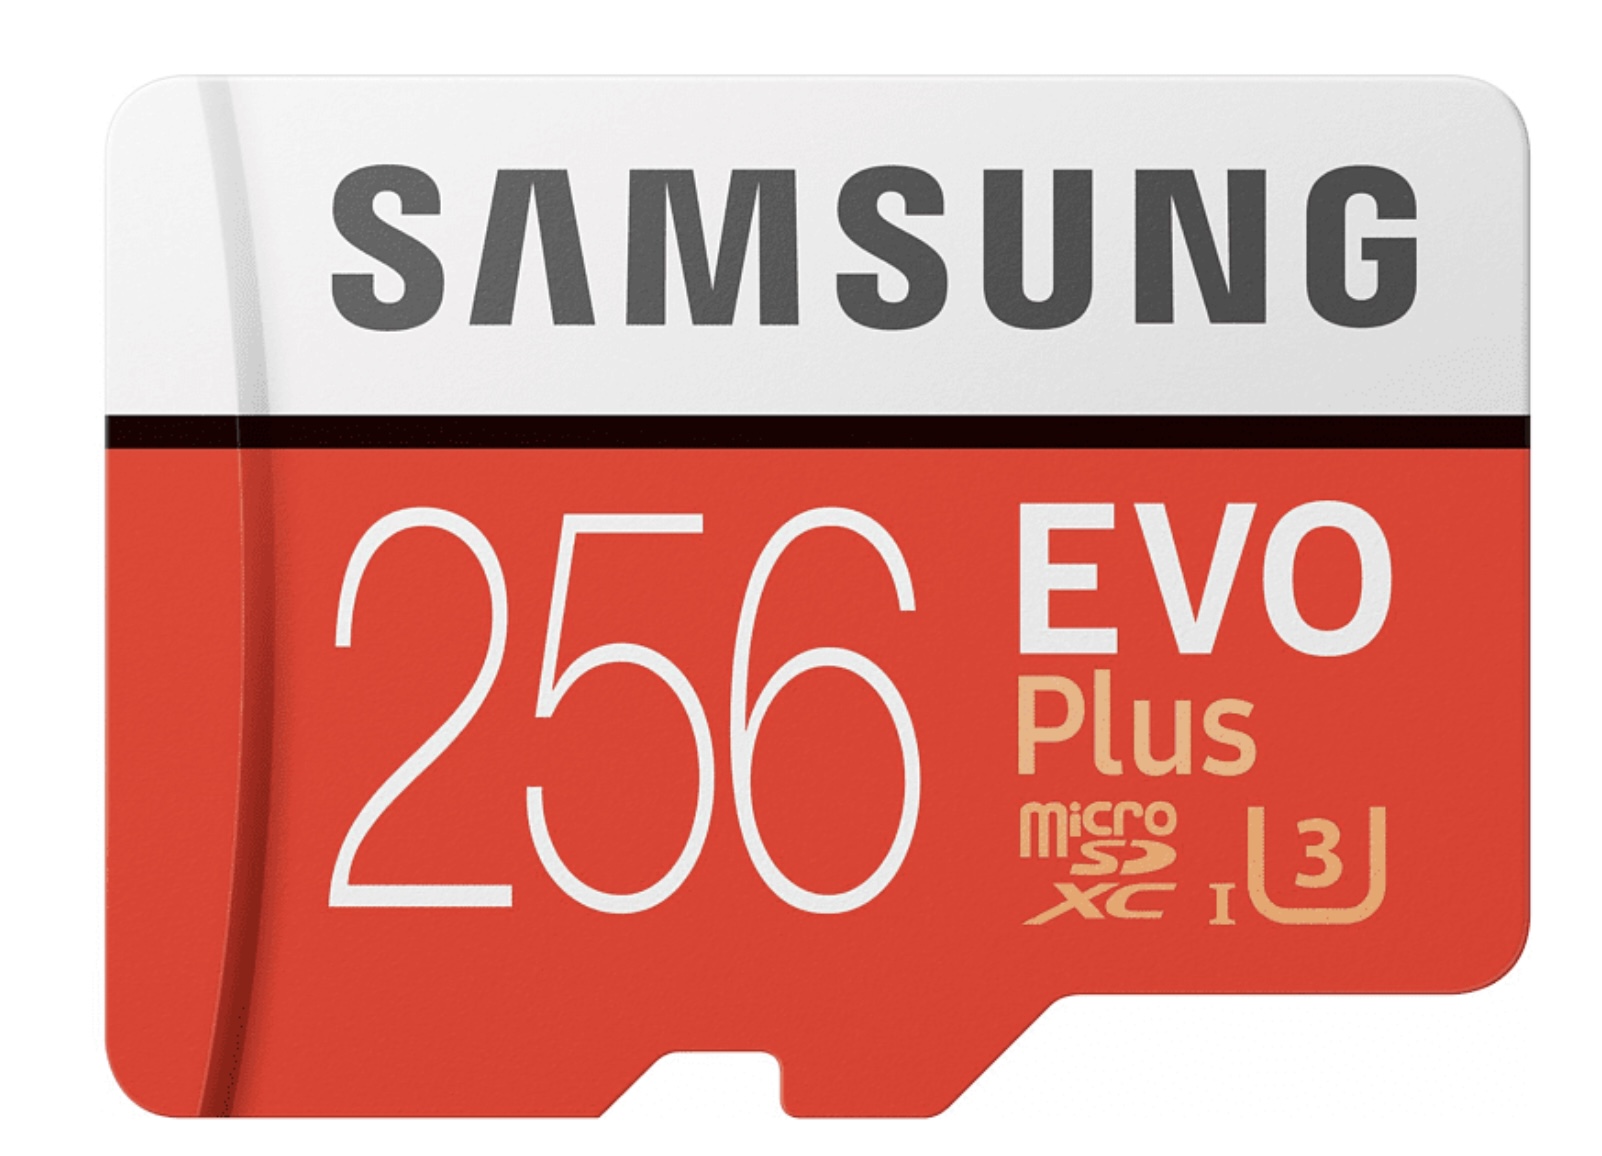 Samsung 256GB Evo Plus